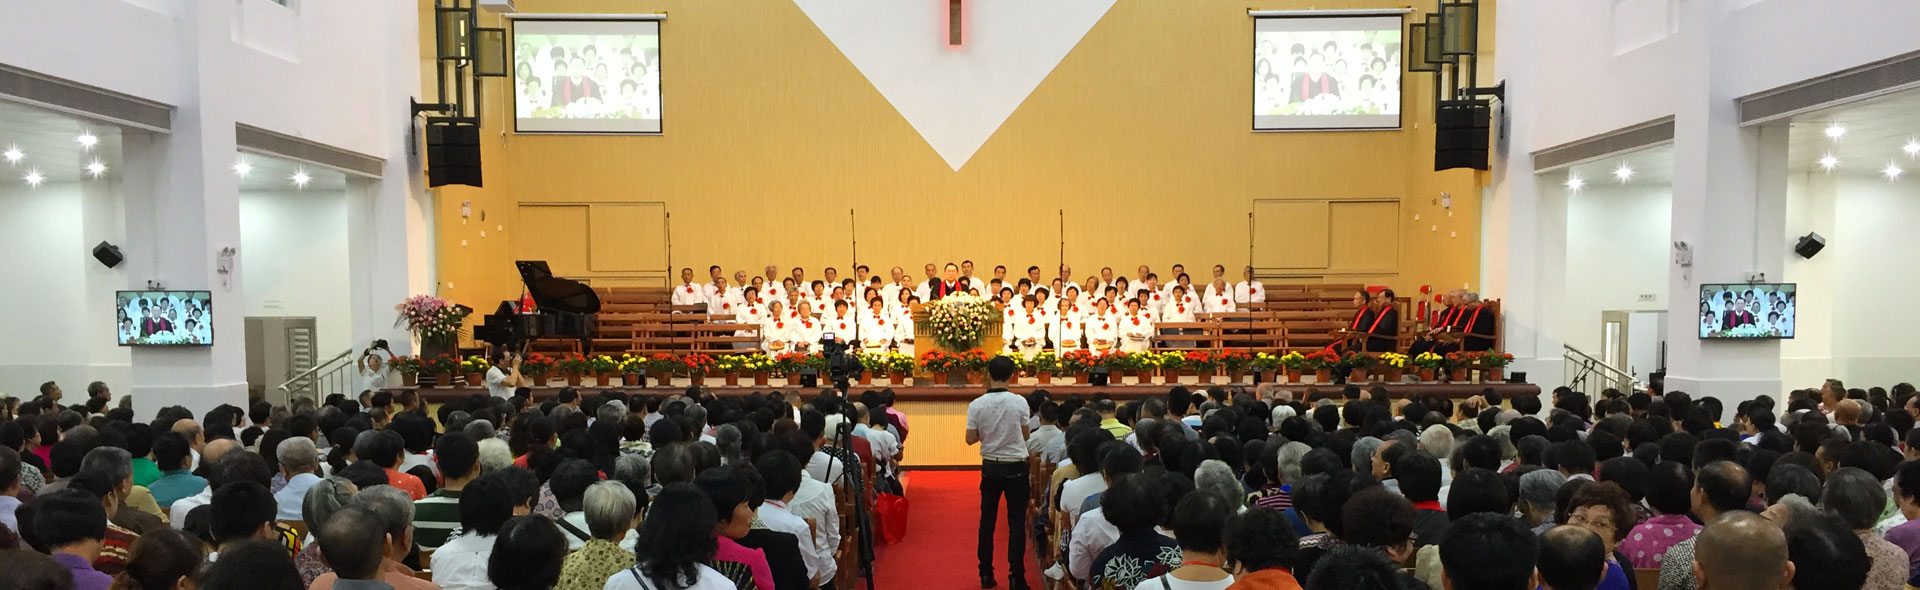 First Uniline Church Installation in China